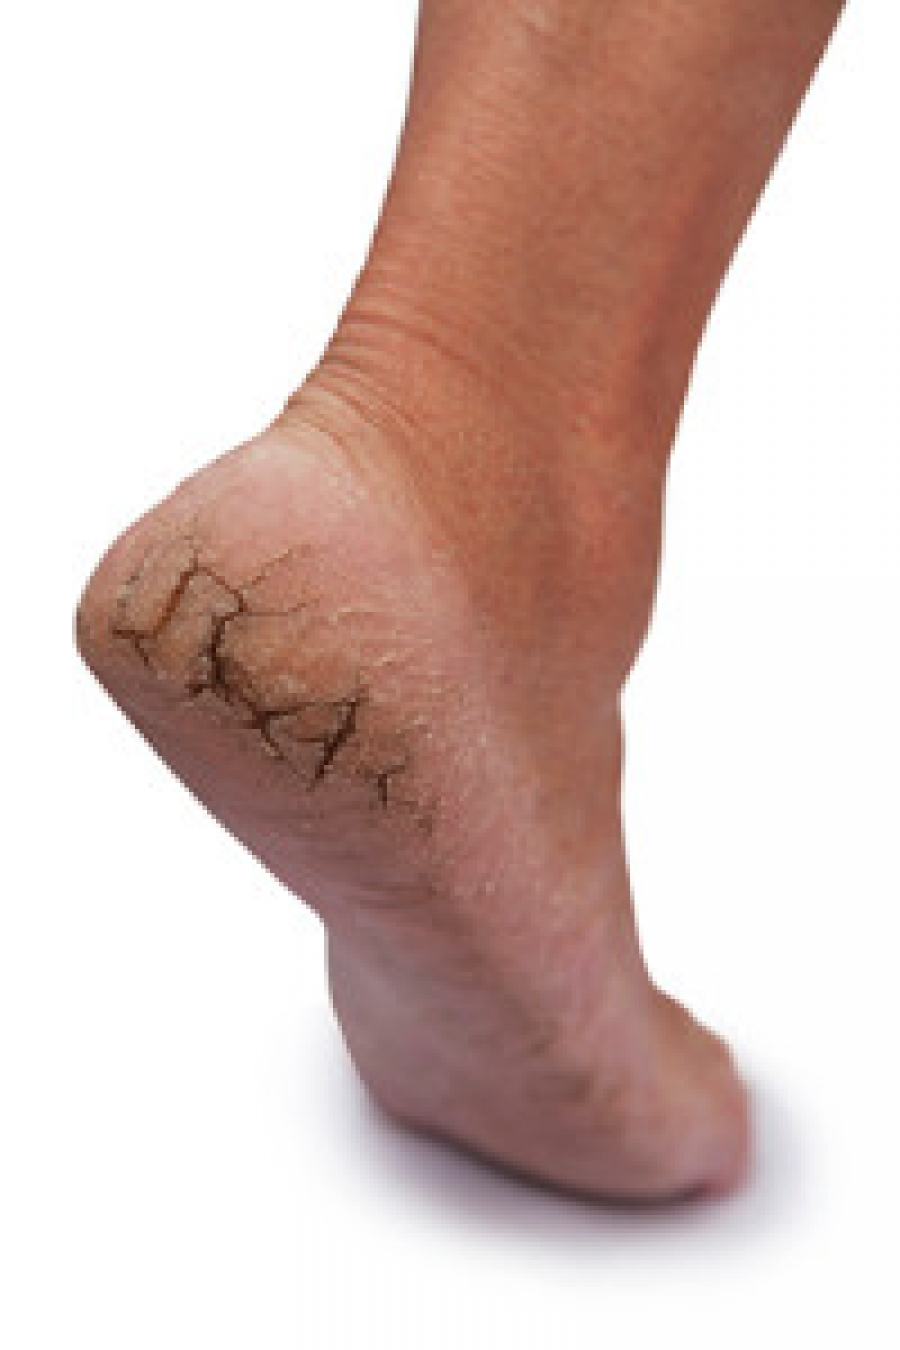 Risk factors for heel fat pad atrophy - footsurgeon